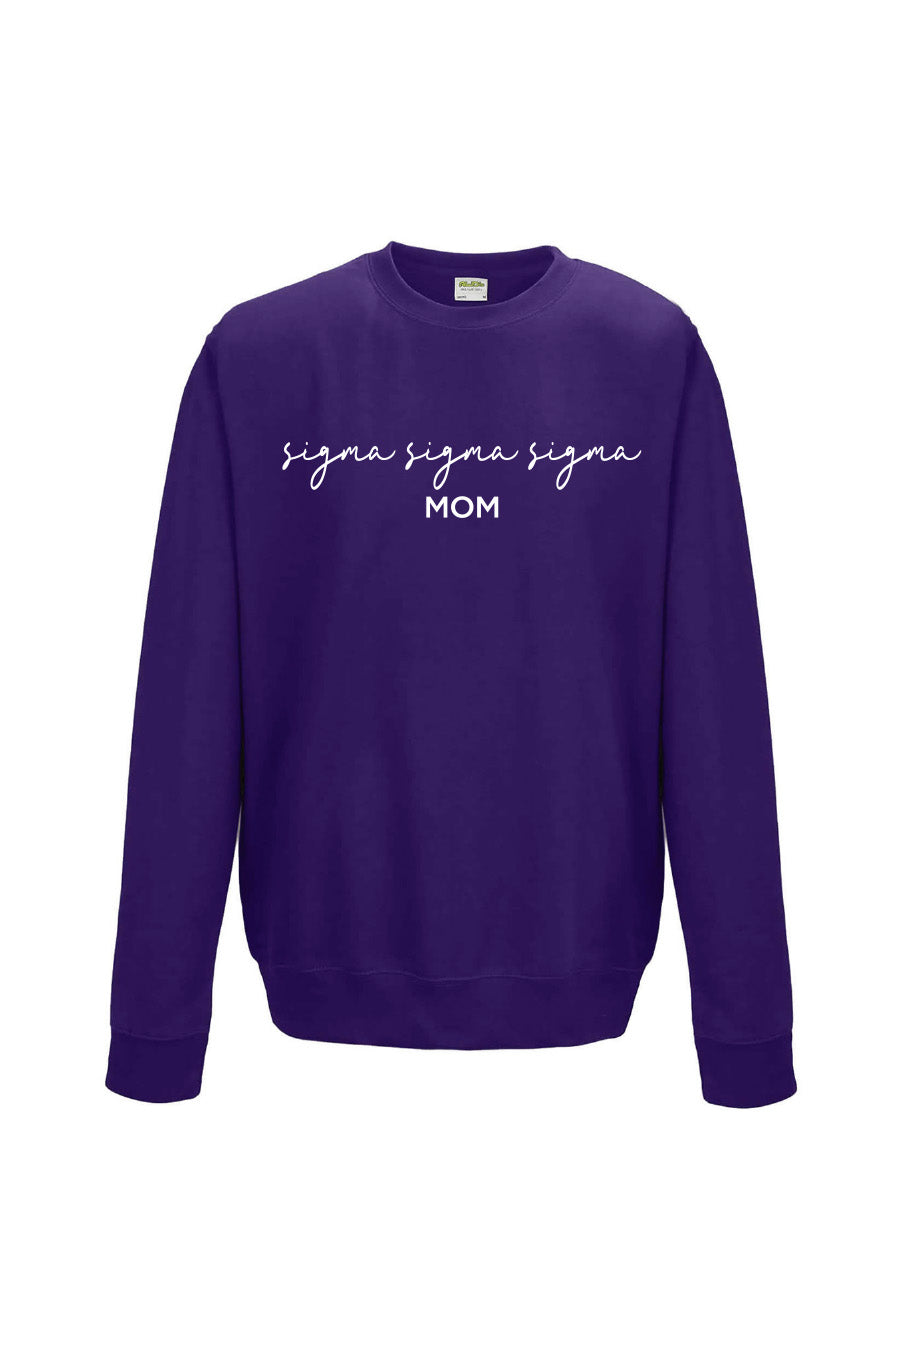 Tri Sigma Mom Sweatshirt